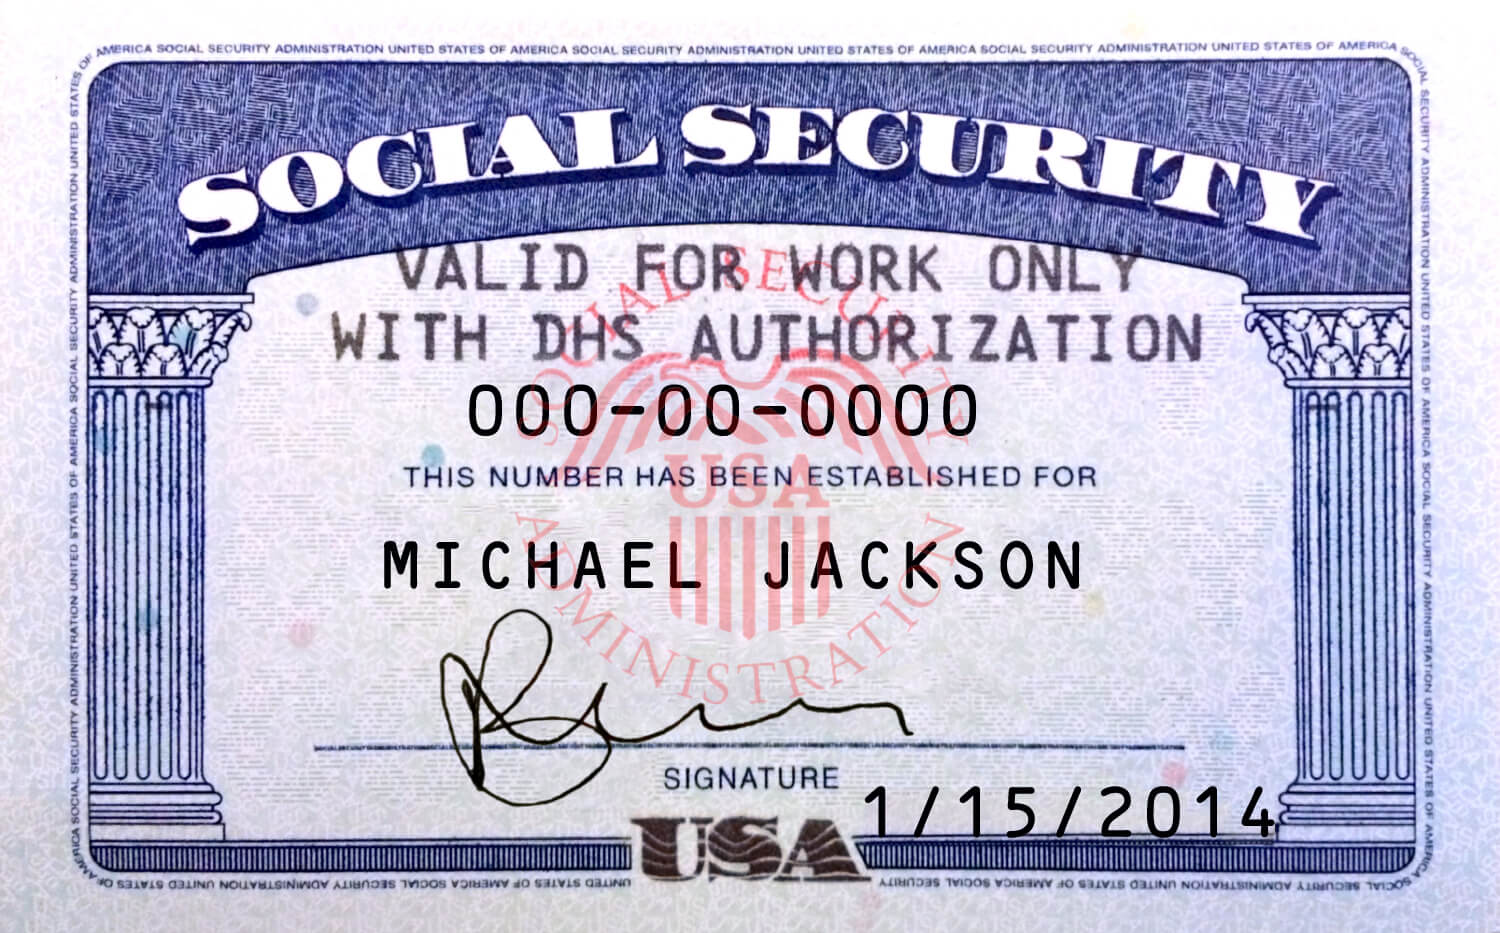 61 [Pdf] Social Security Number 765 Generator Printable Hd Regarding Social Security Card Template Pdf